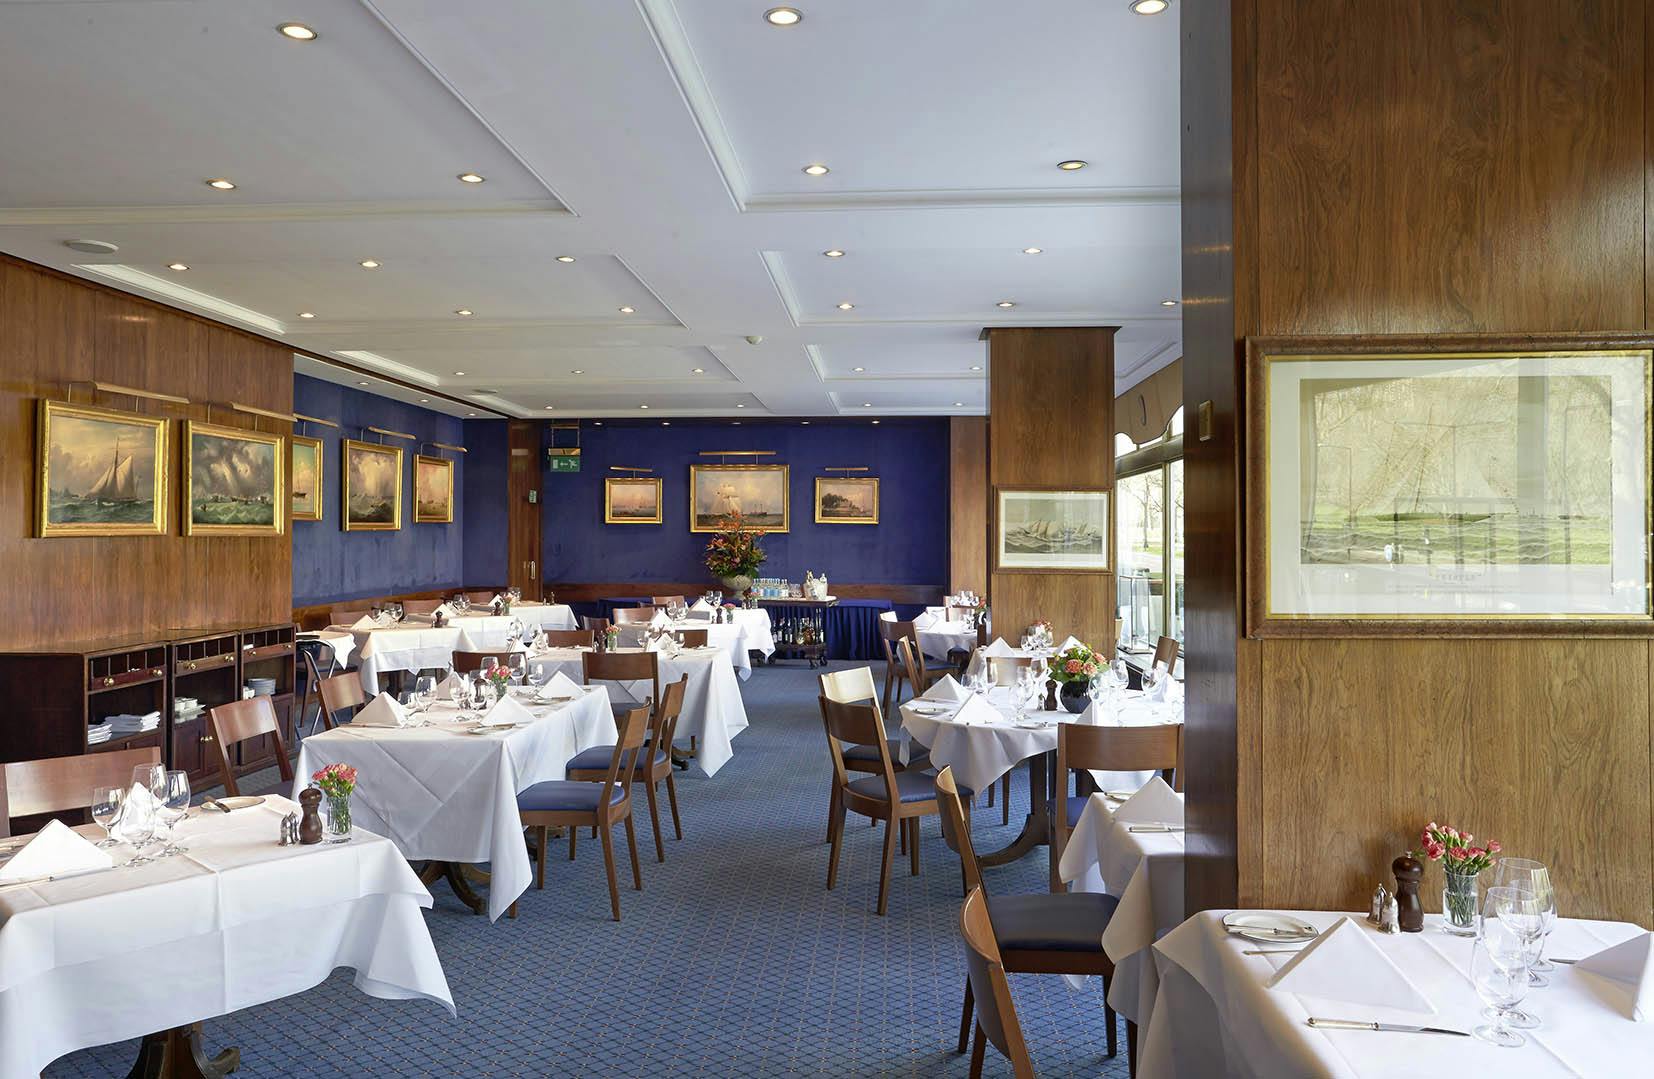 The Royal Thames Yacht Club  - The Coffee Room  image 2